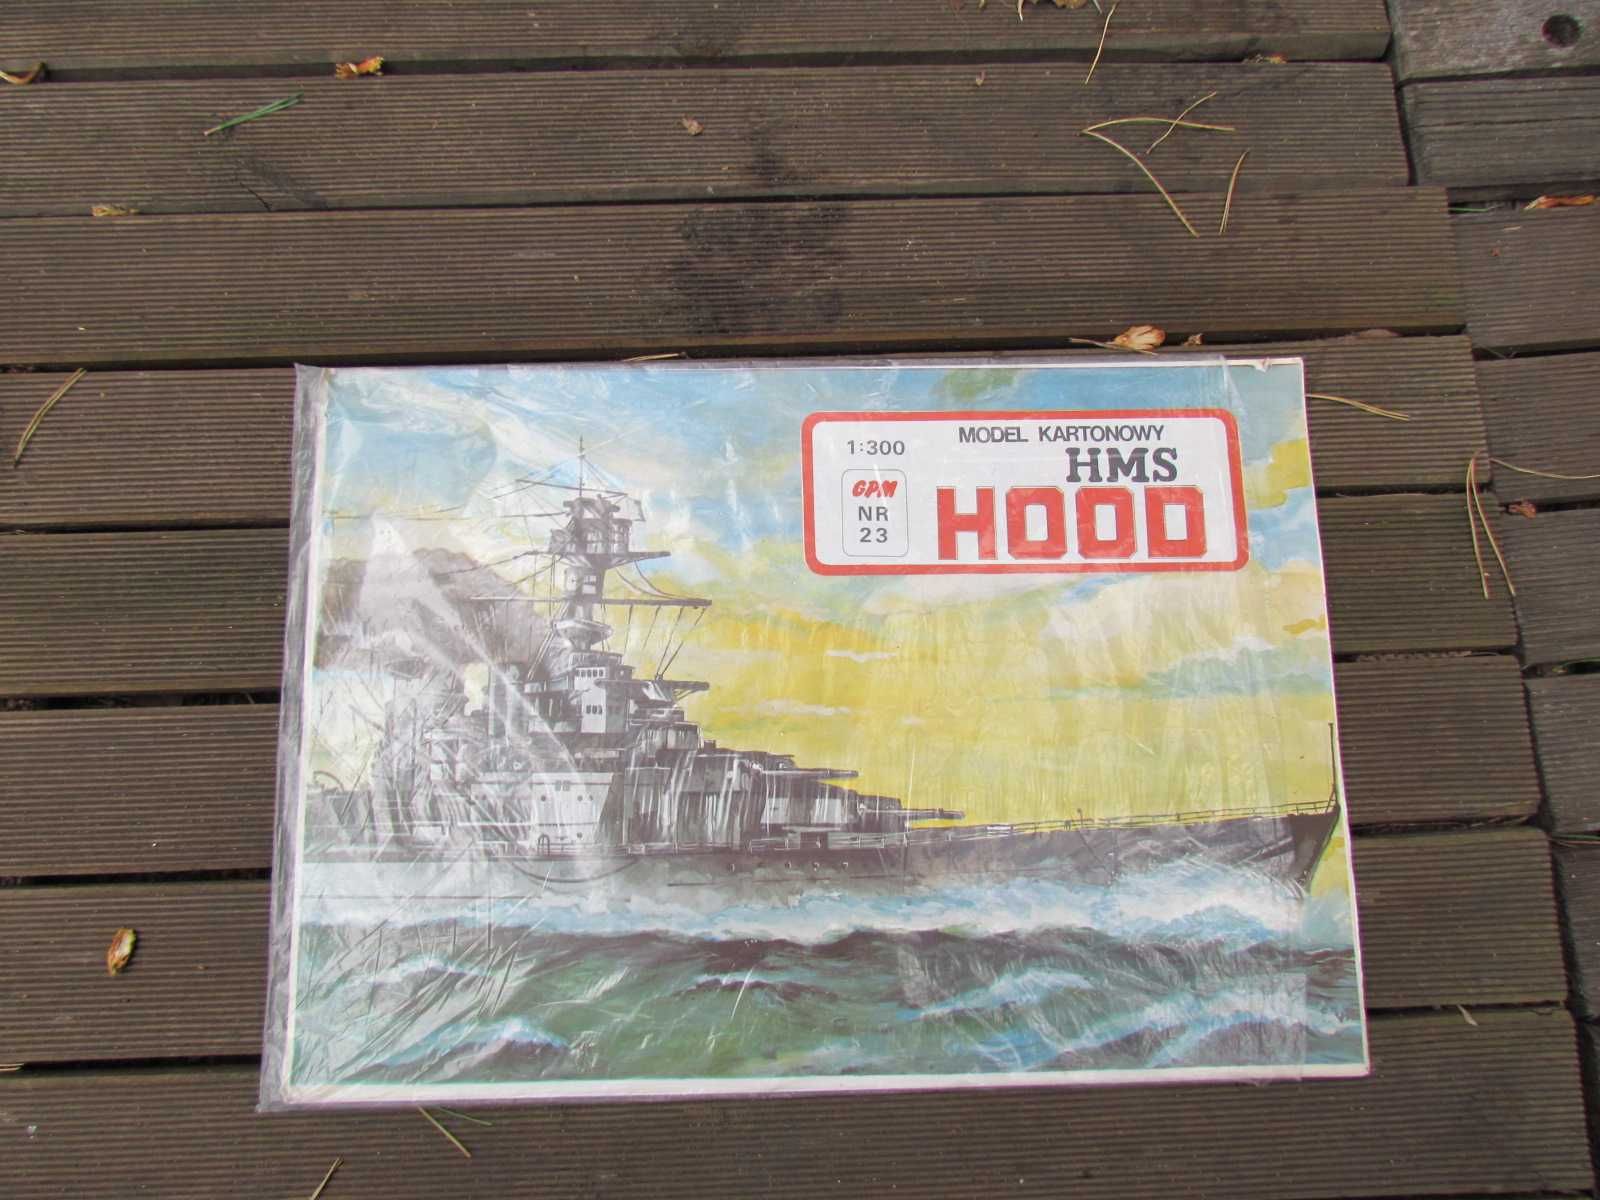 Model kartonowy Gpm HMS Hood